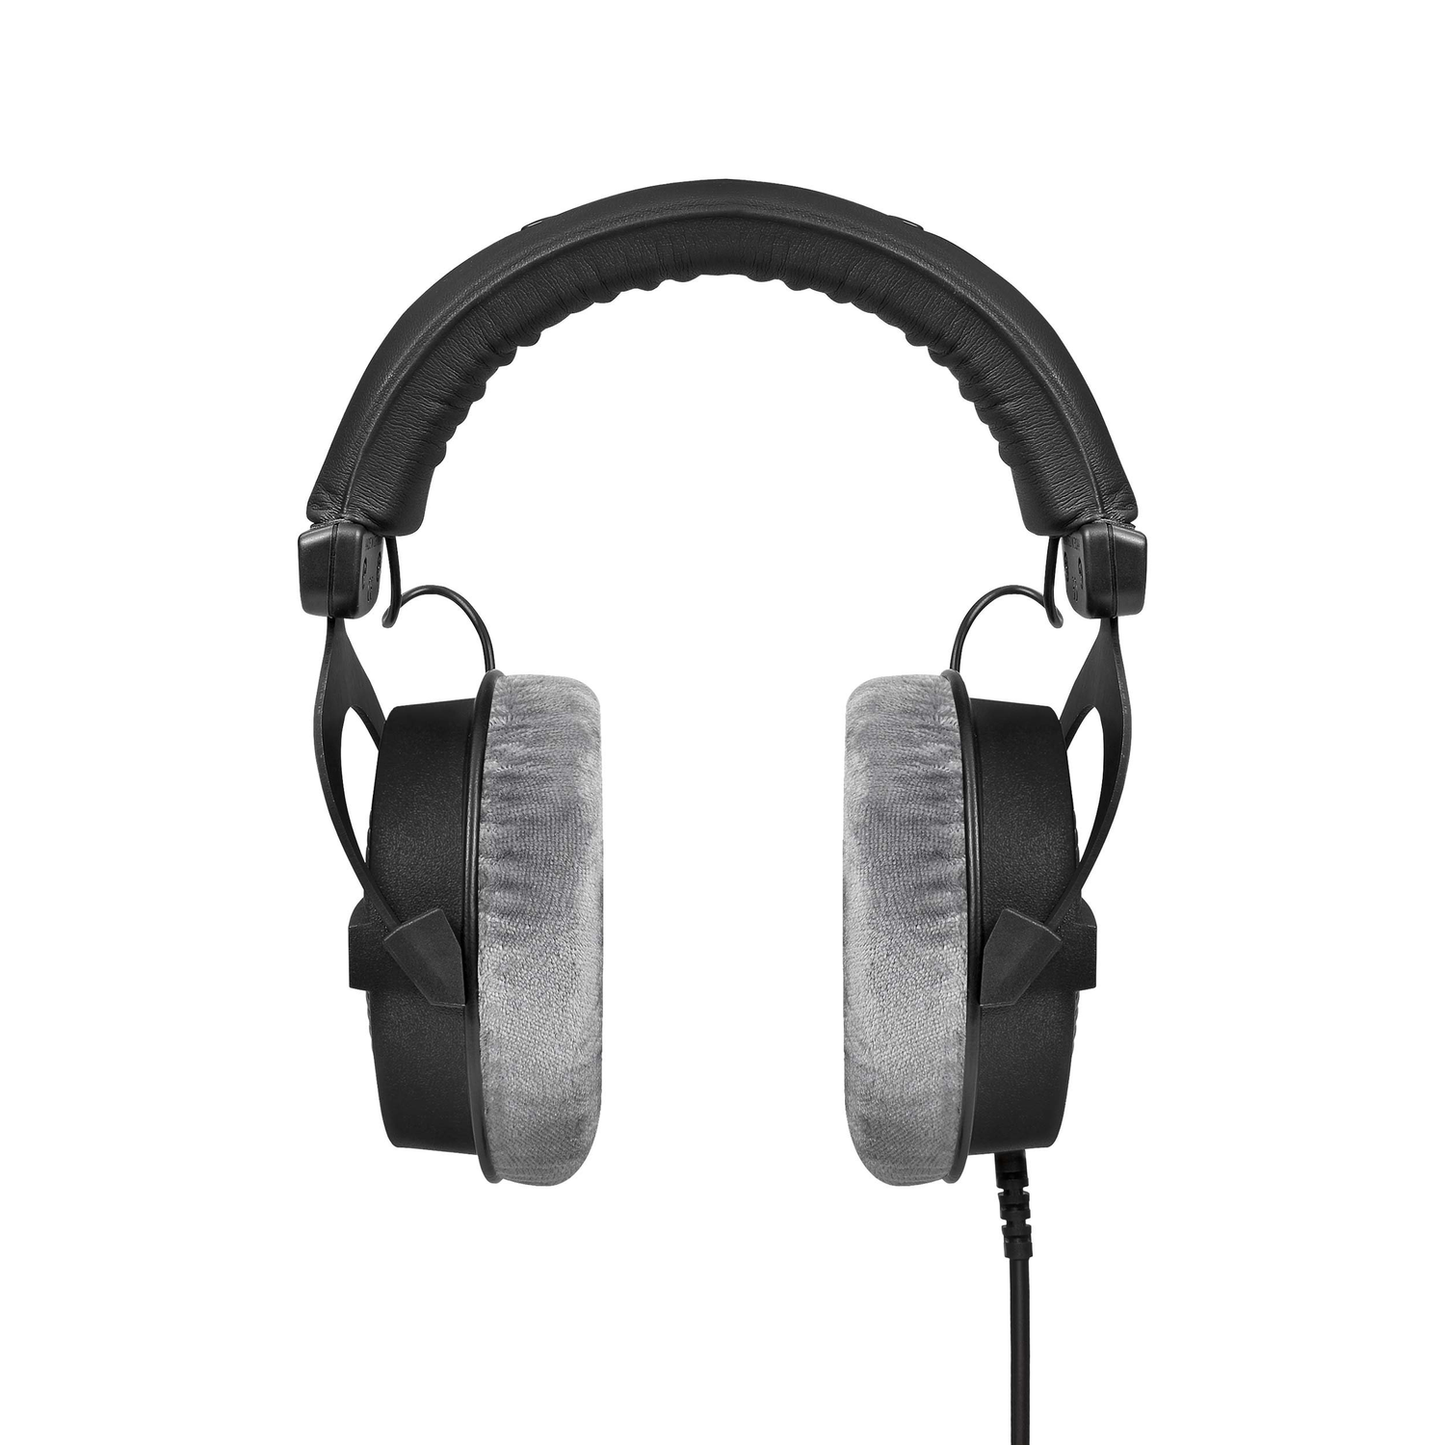 DT 990 PRO Beyerdynamic audífonos de 250 ohms para estudio